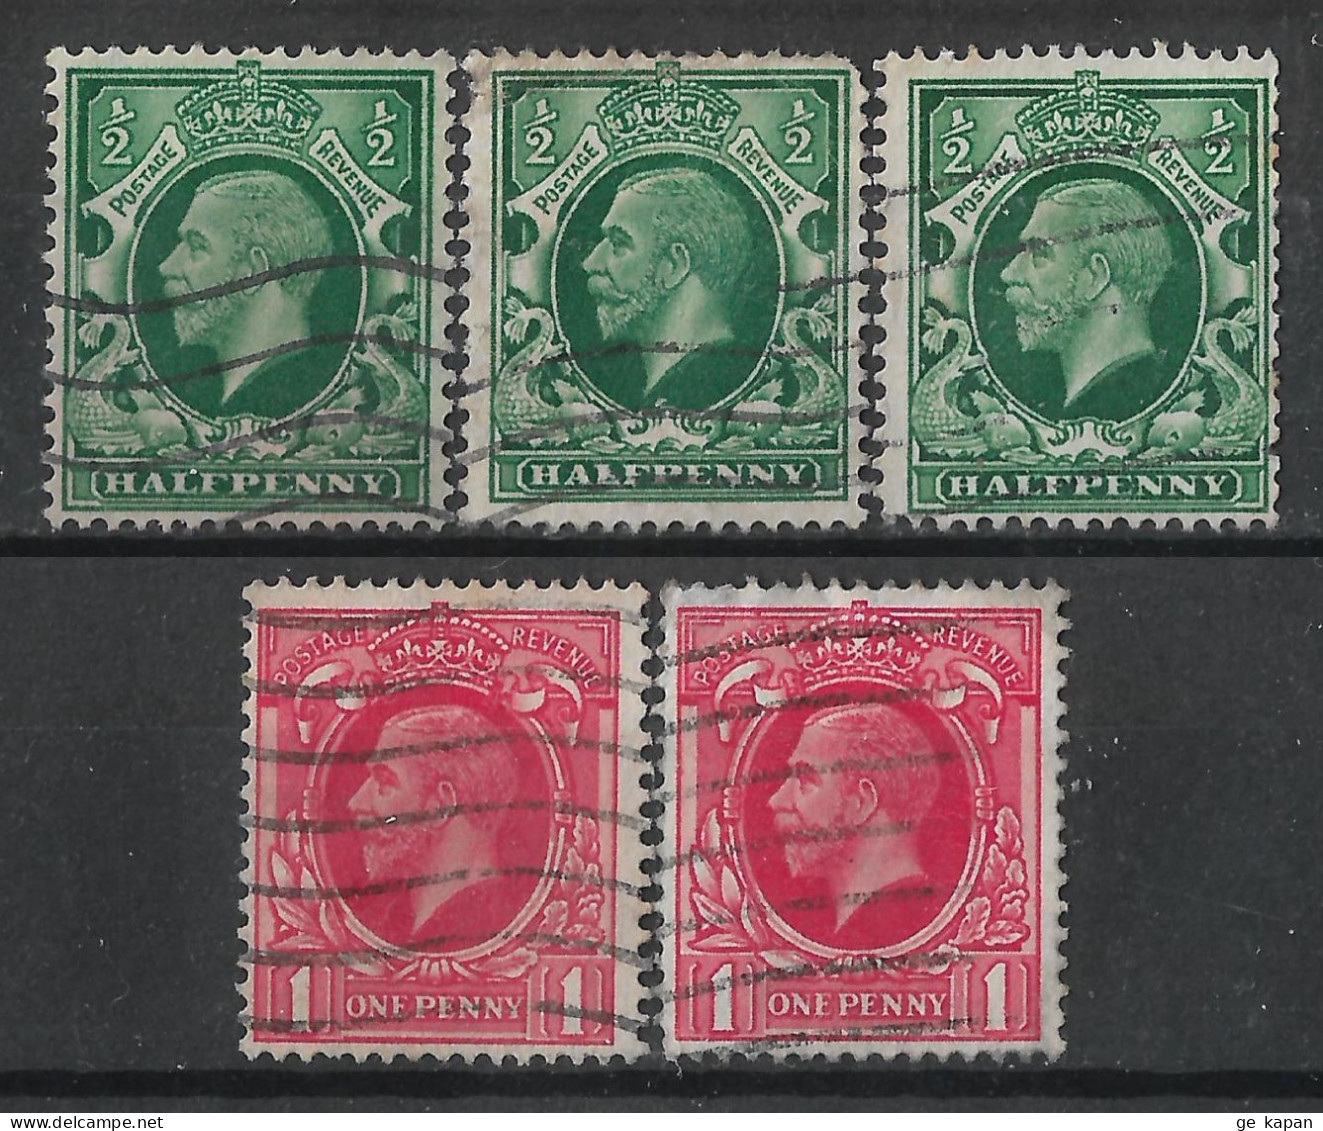 1934 GREAT BRITAIN Set Of 5 Used Stamps (Scott # 210,211) CV $3.00 - Gebruikt